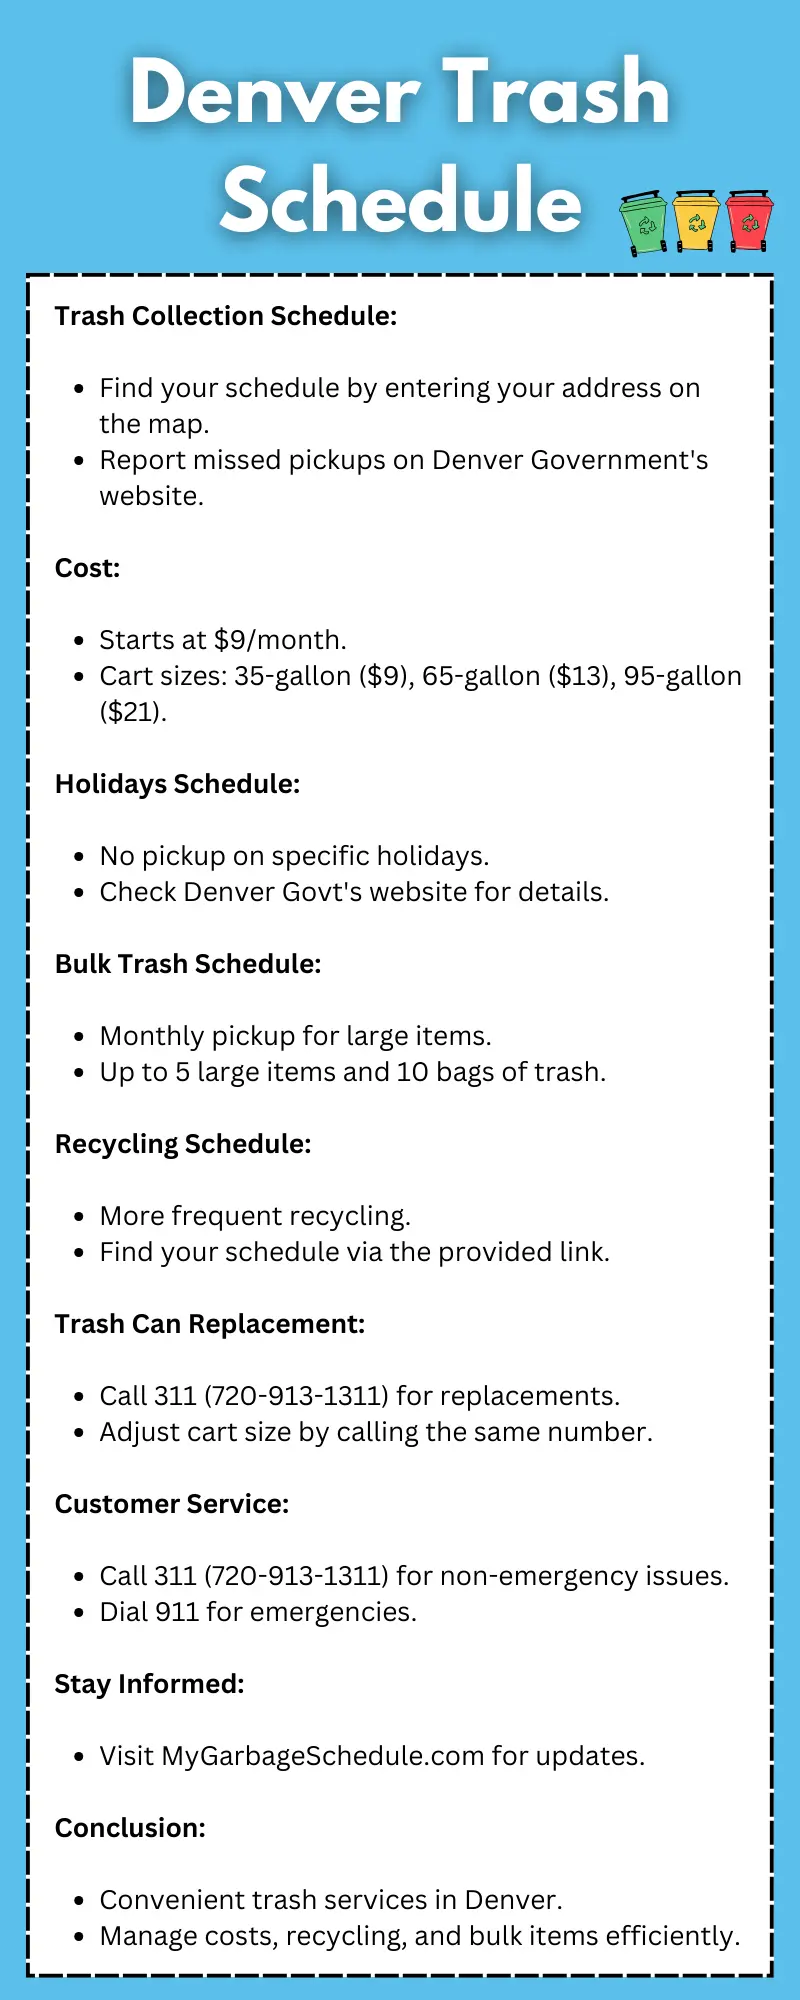 Denver Trash Schedule Infographic